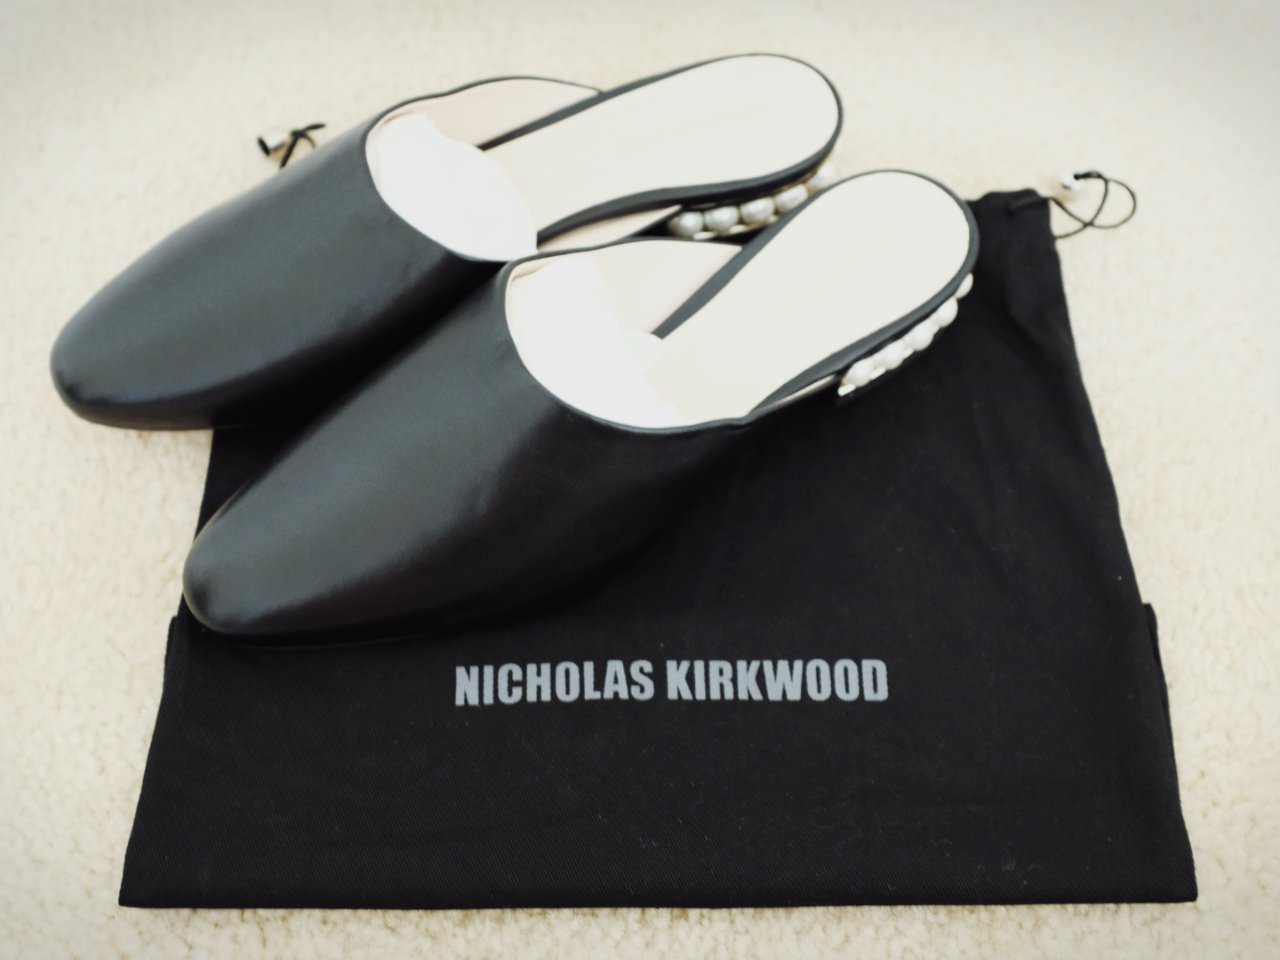 Nicholas Kirkwood 尼可拉斯·科克伍德,买鞋不能停,鞋控的日常,五行缺鞋,鞋不平何以平天下,买回来不闲置